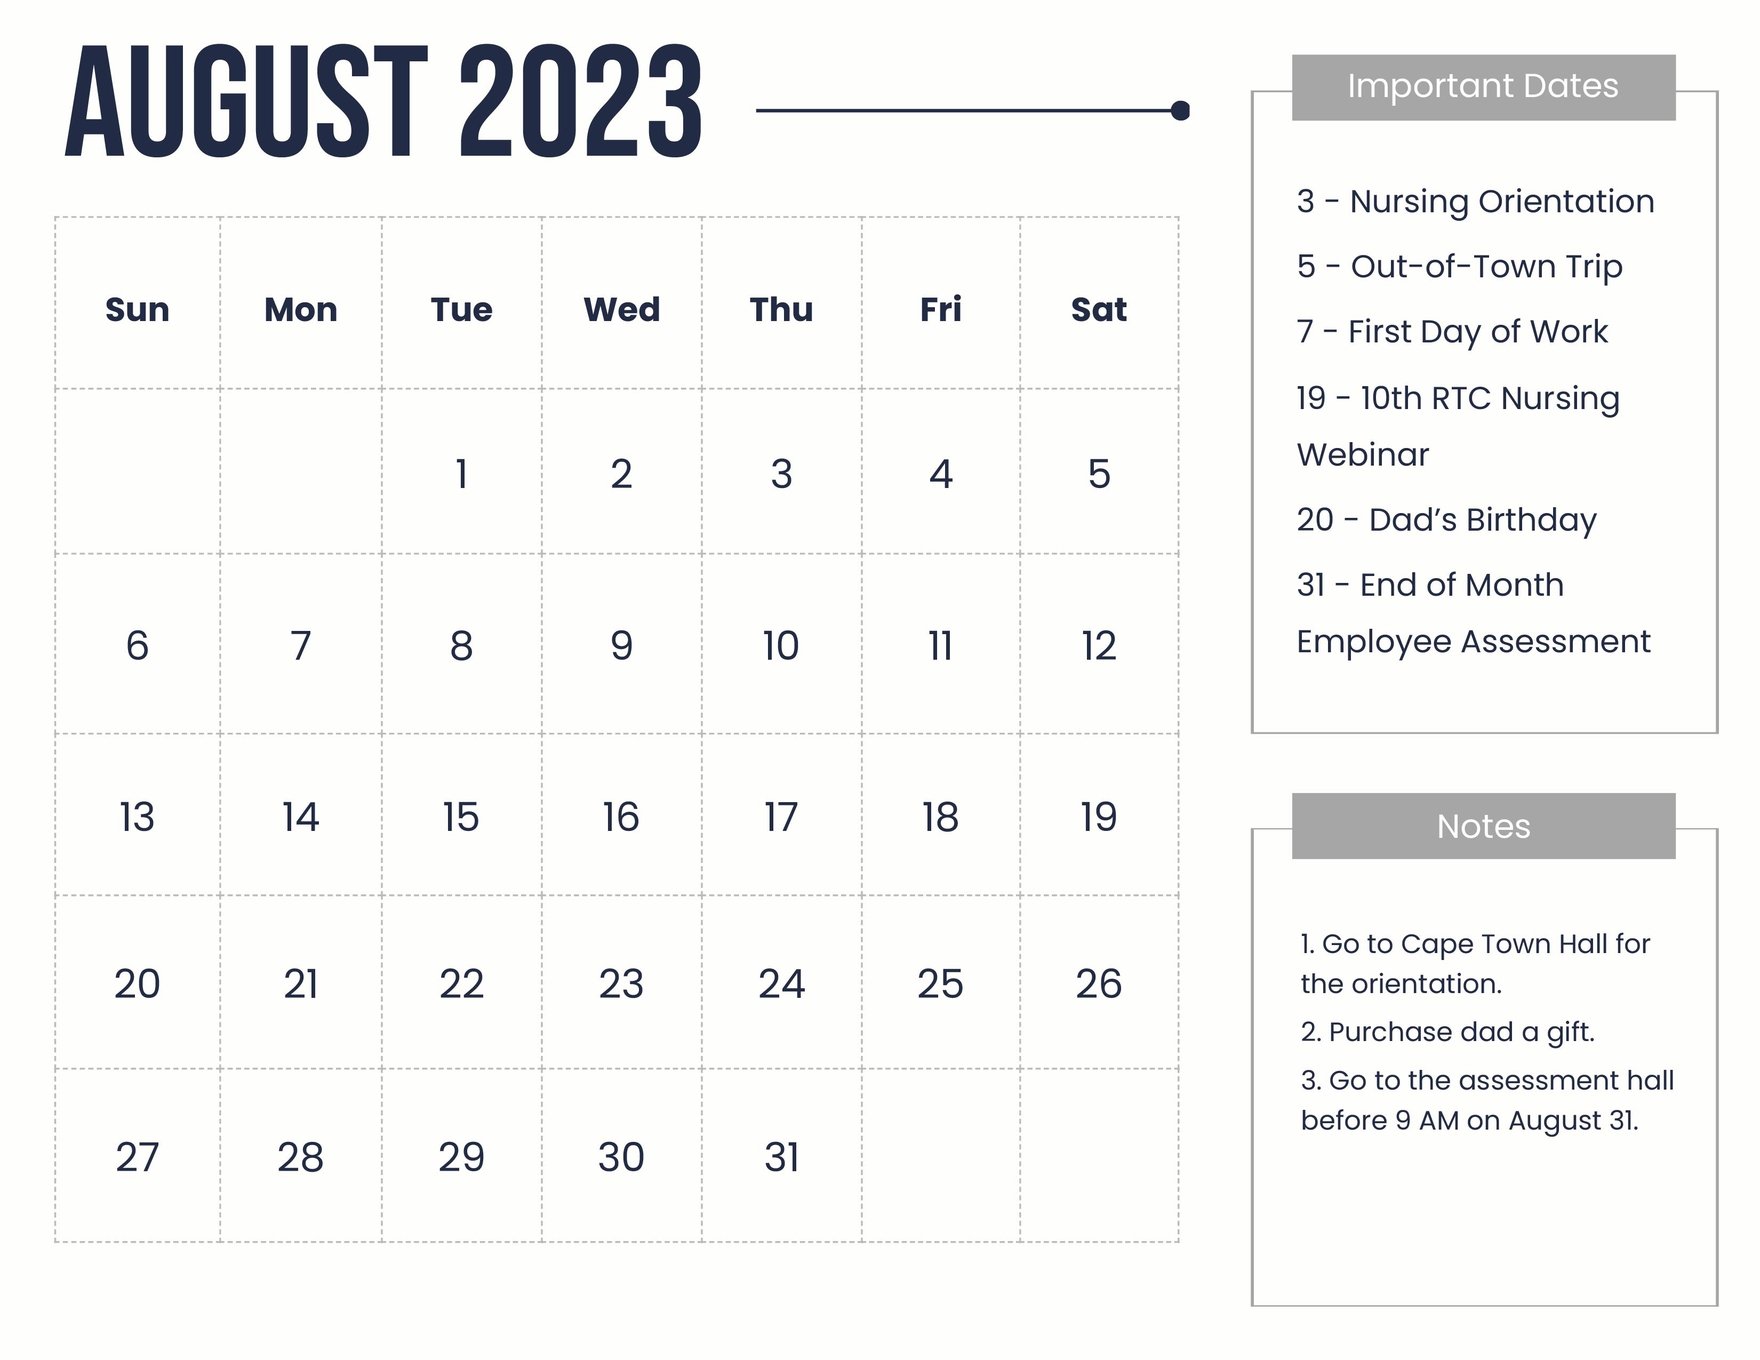 Free Printable August 2023 Calendar Template in Word, Google Docs, Excel, Google Sheets, Illustrator, EPS, SVG, JPG